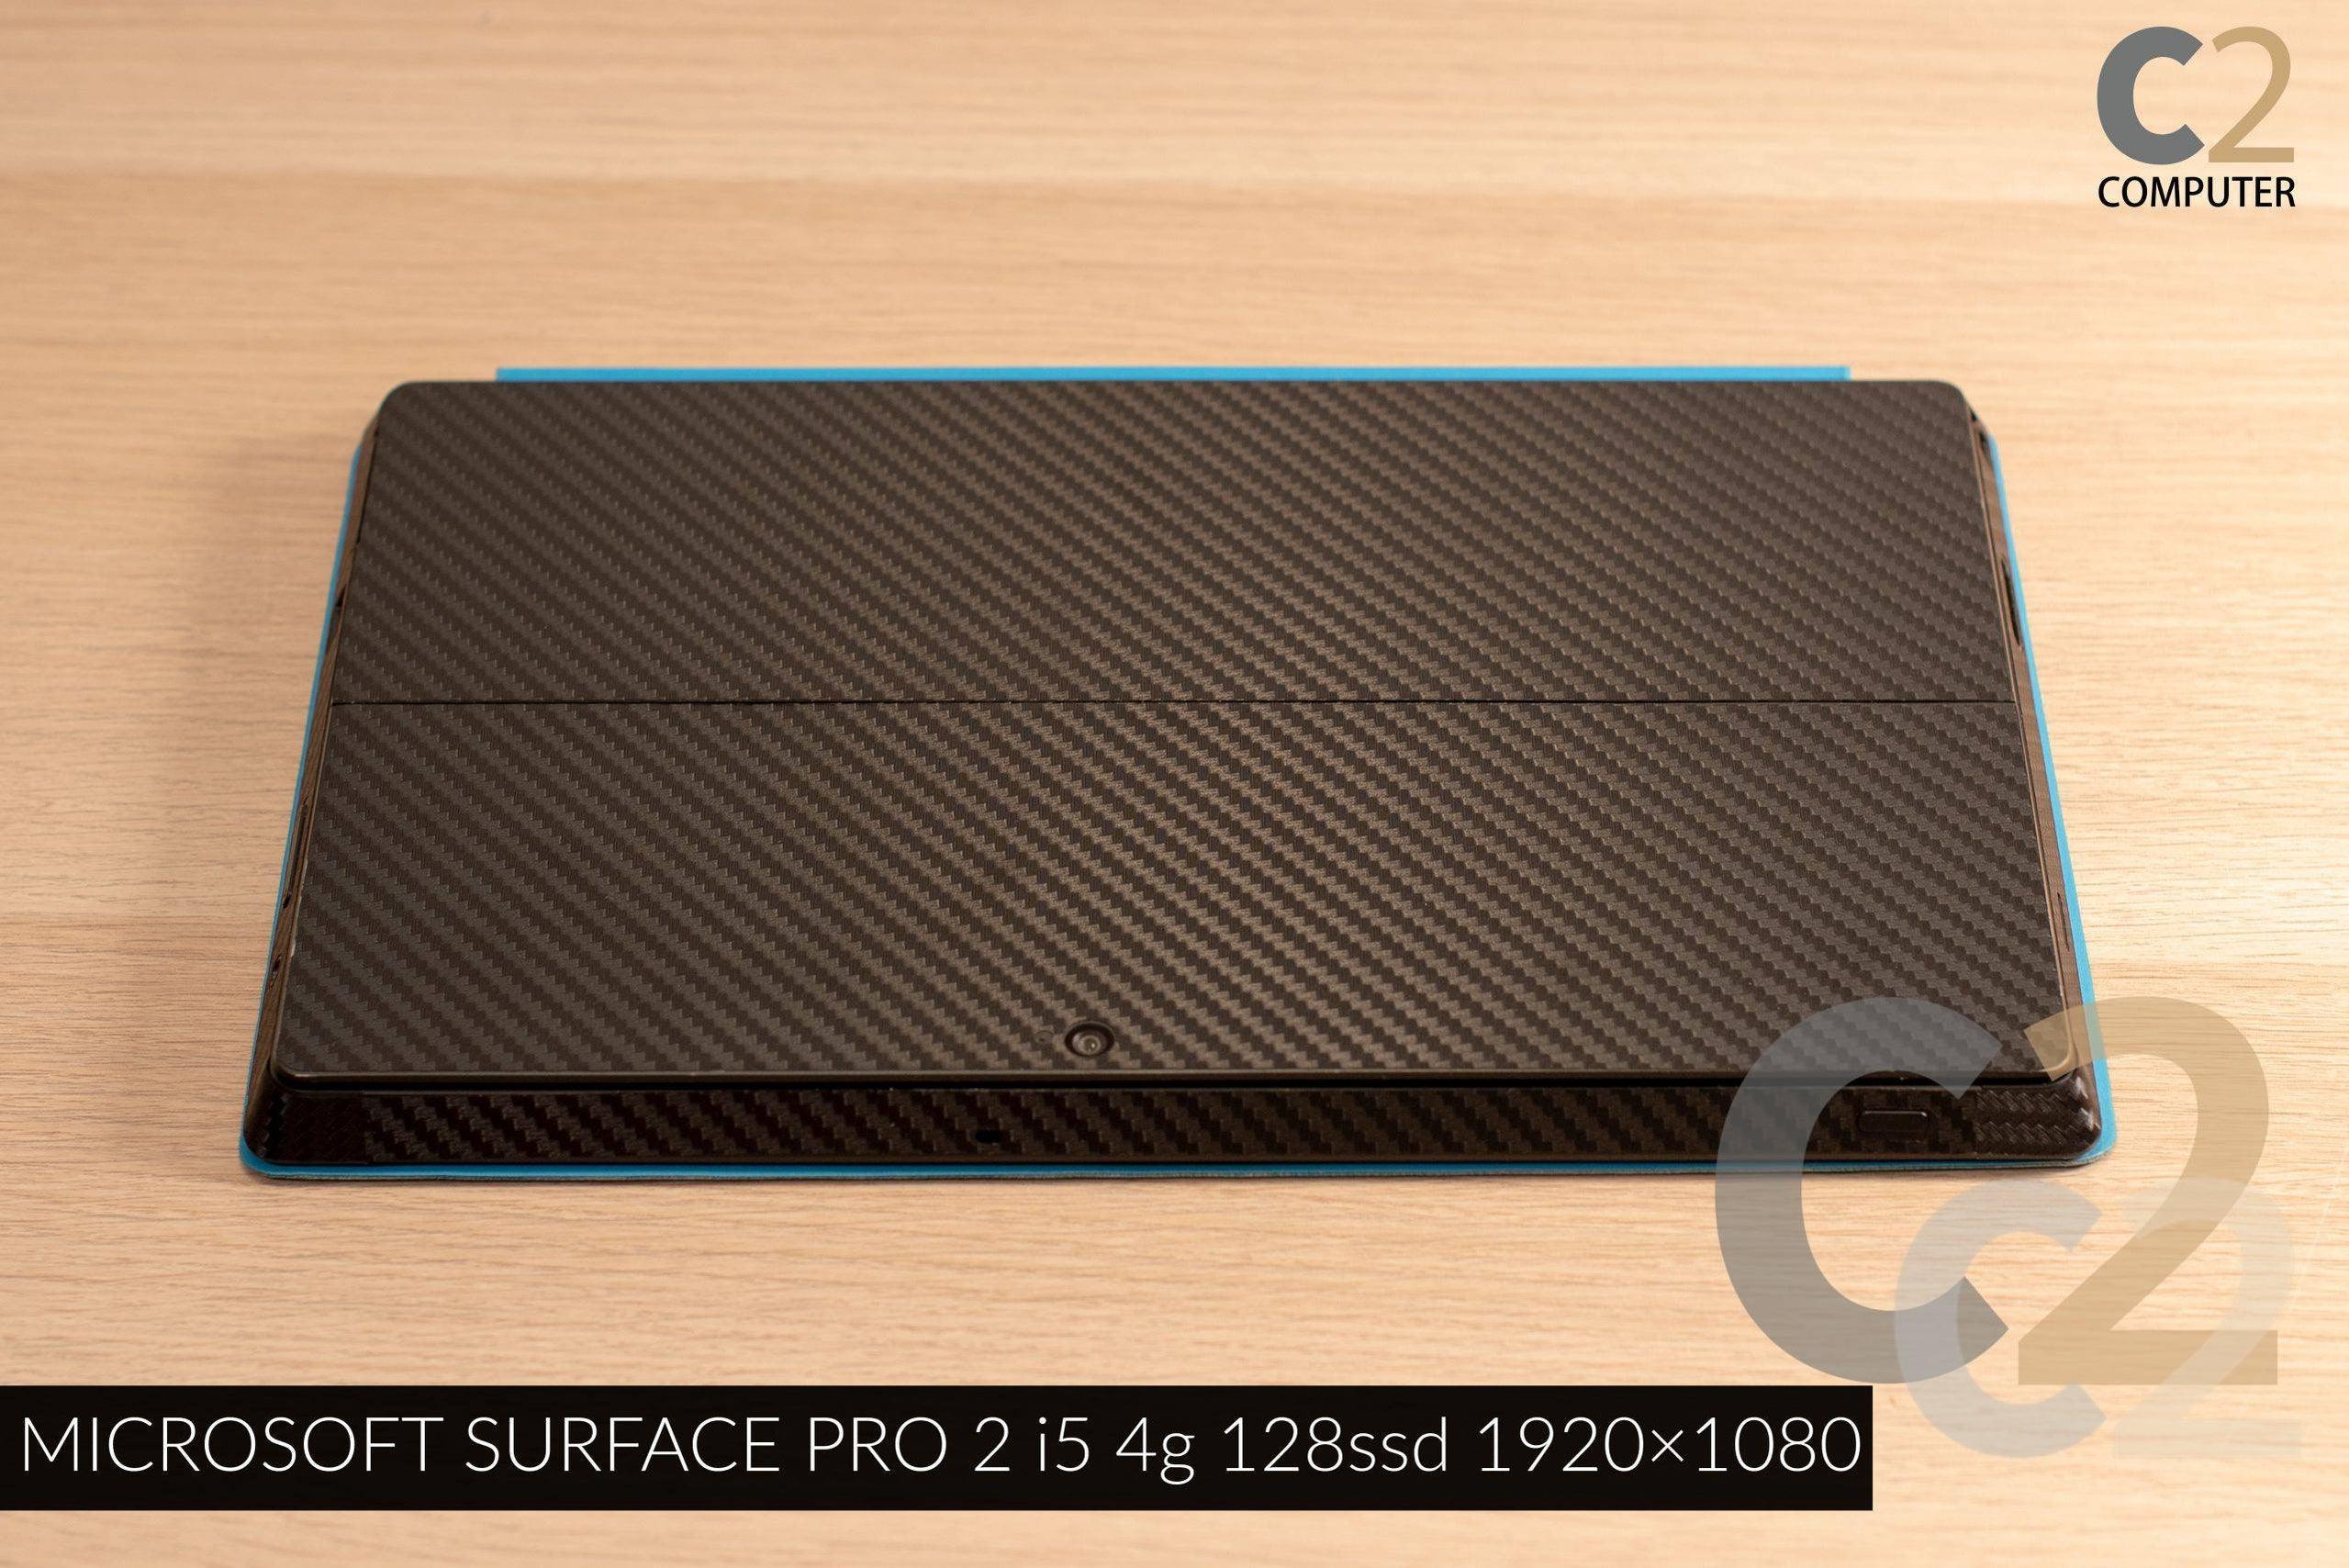 （特價一台） MICROSOFT SURFACE PRO 2 i5 4g 128ssd 2 in 1 Ultrabook 連 keyboard 95%NEW MICROSOFT